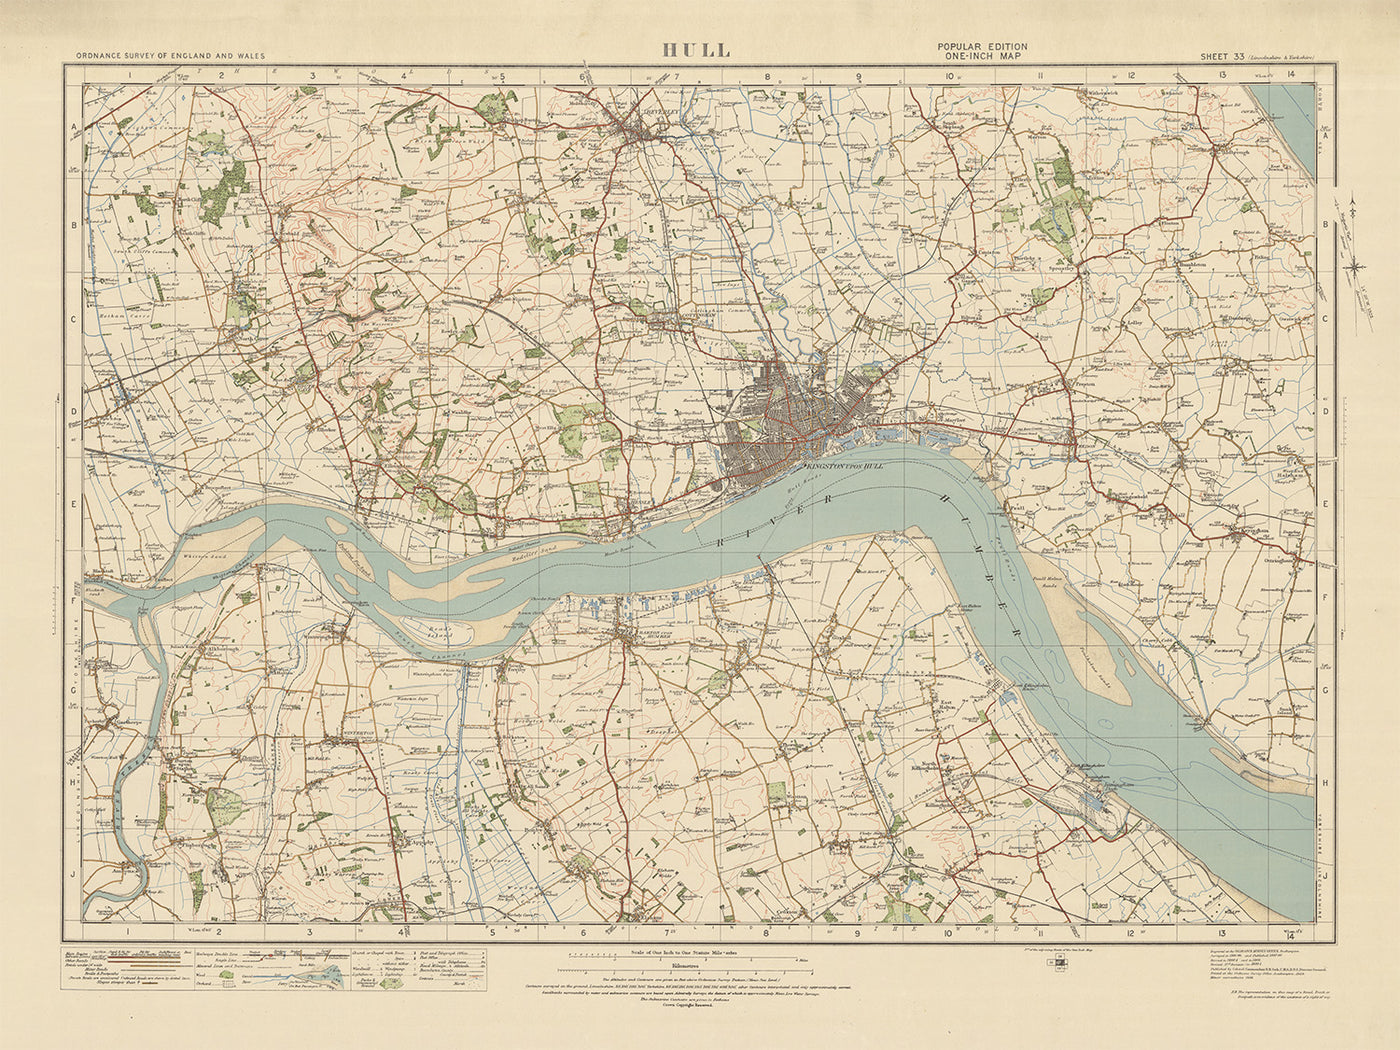 Old Ordnance Survey Map, Sheet 33 - Hull, 1925: Beverley, Barton-upon-Humber, Hessle, Winterton and River Humber